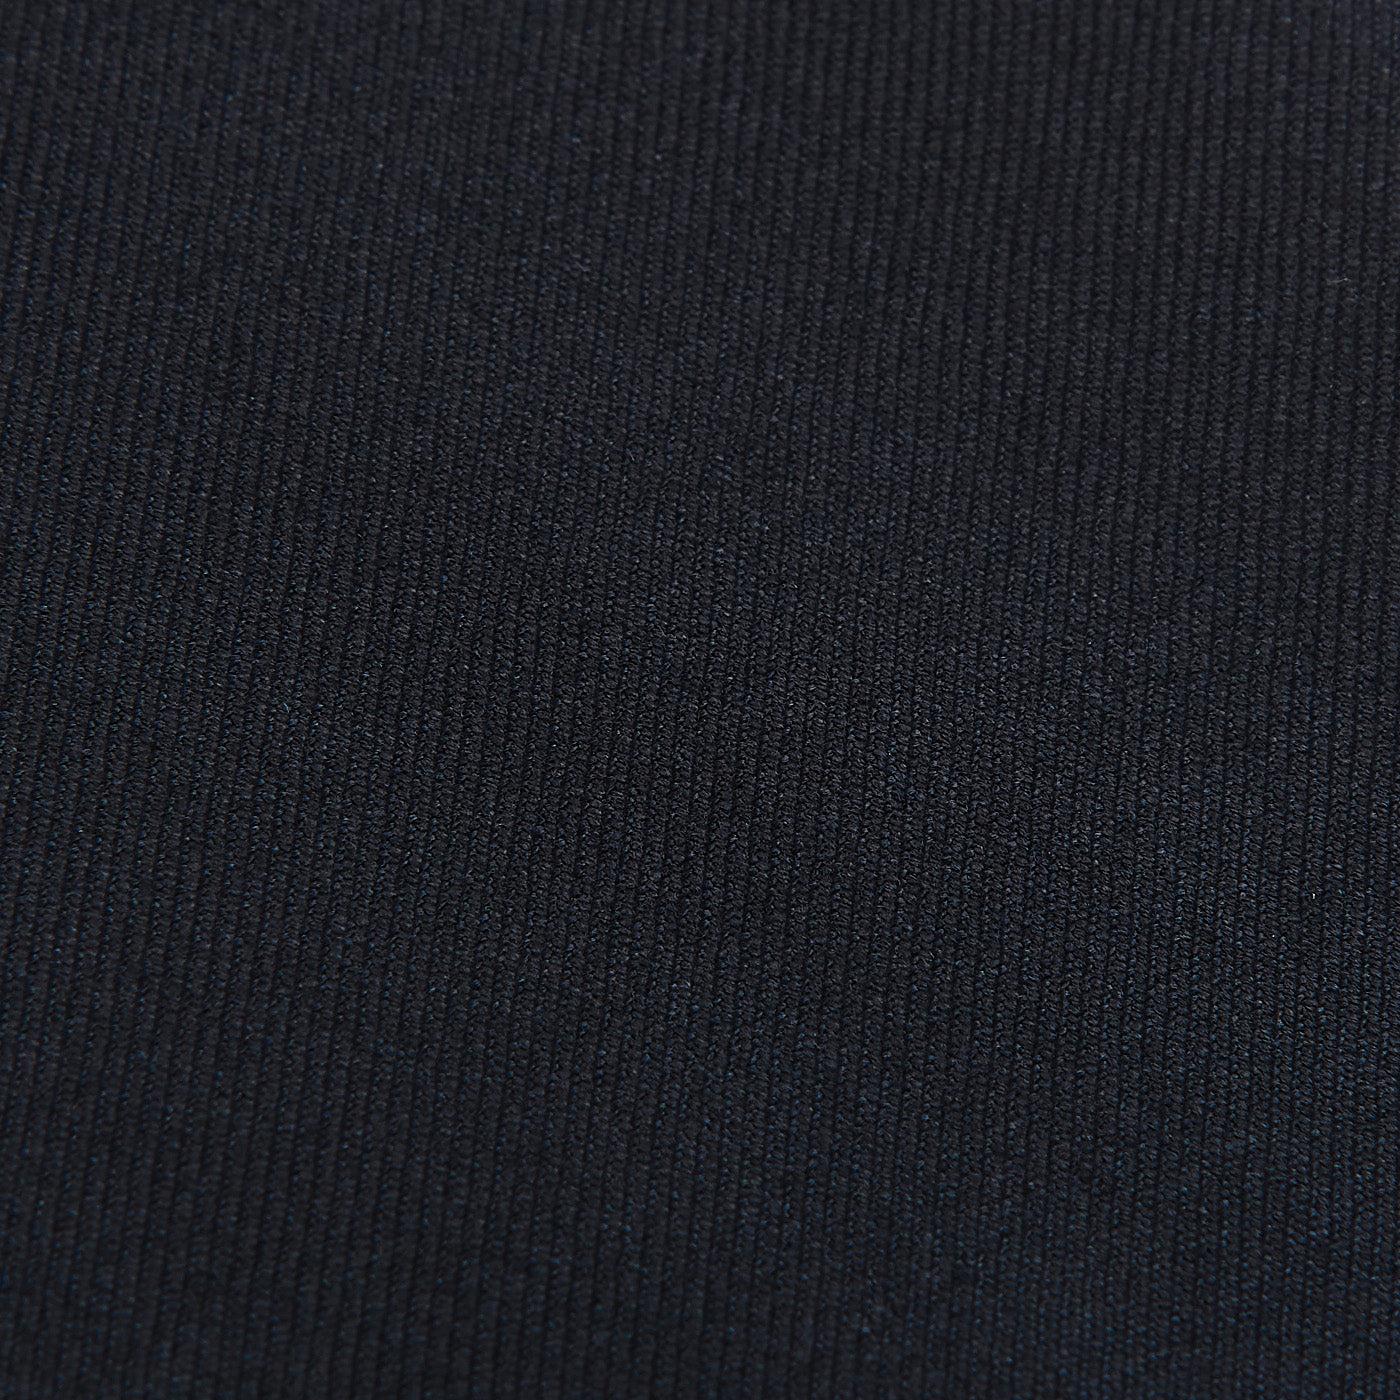 Studio 73 Navy Super 130s Wool Suit Trousers Fabric.jpg1